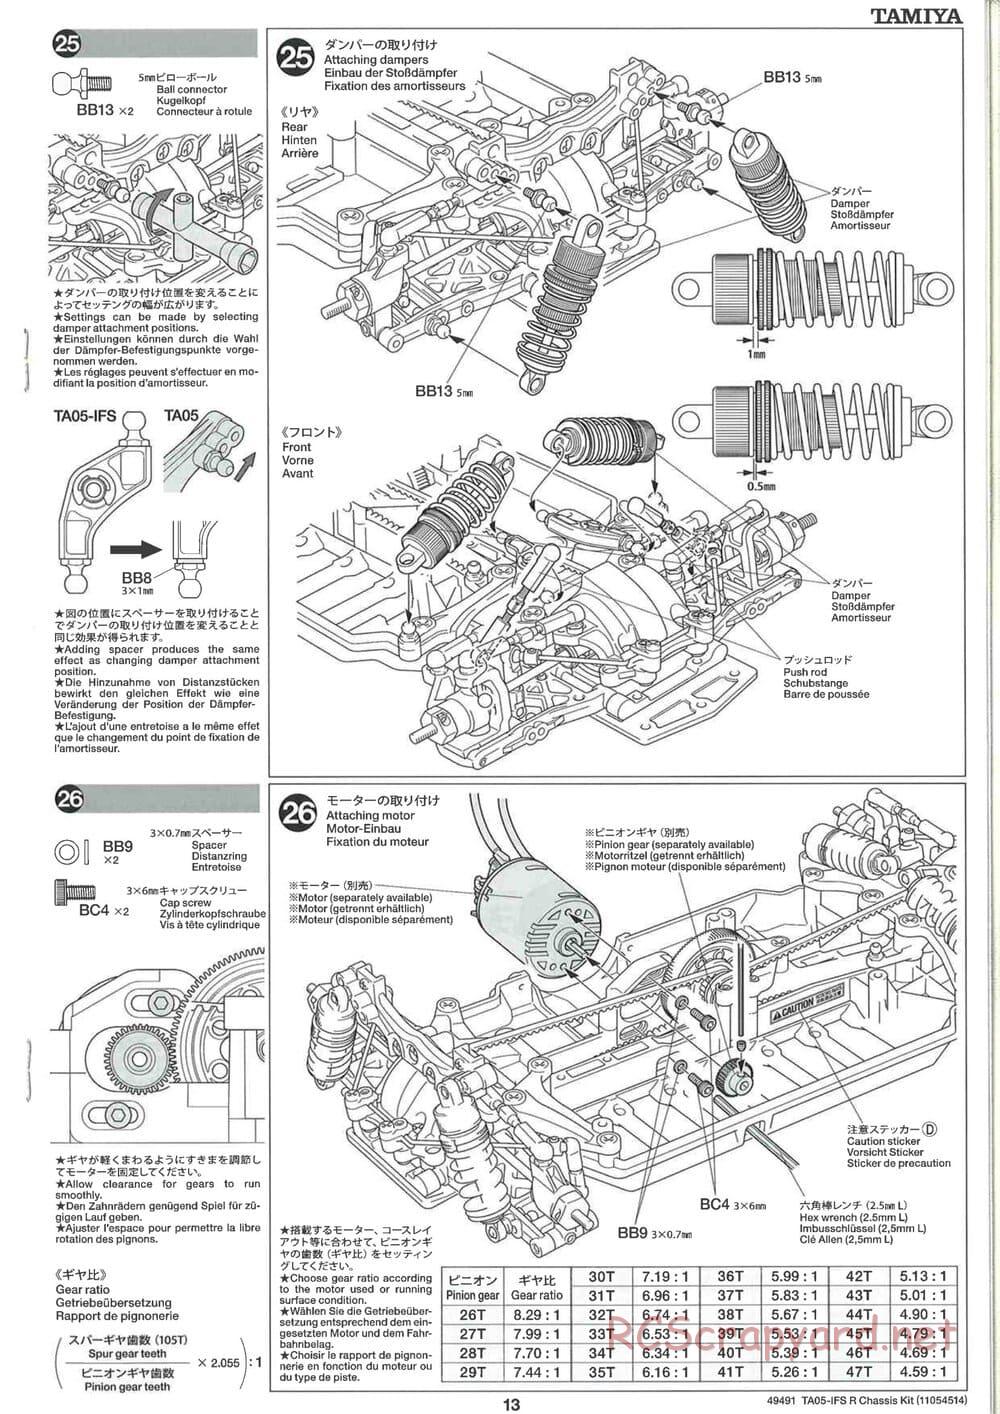 Tamiya - TA05-IFS R Chassis - Manual - Page 13